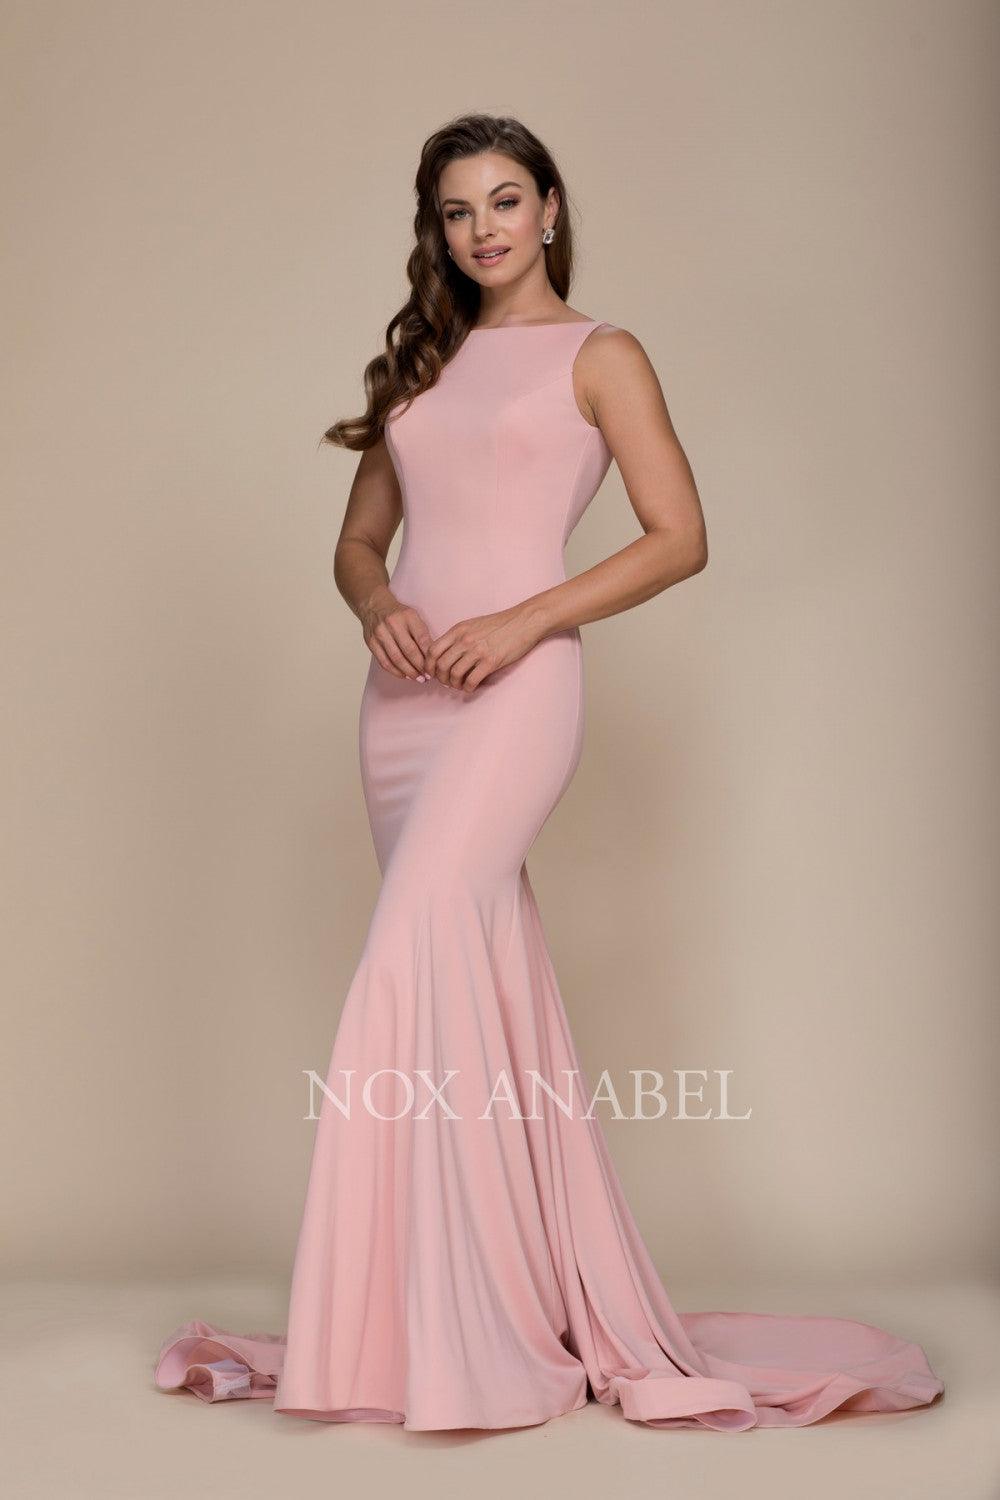 Long V Back Formal Prom Dress Evening Gown - The Dress Outlet Nox Anabel